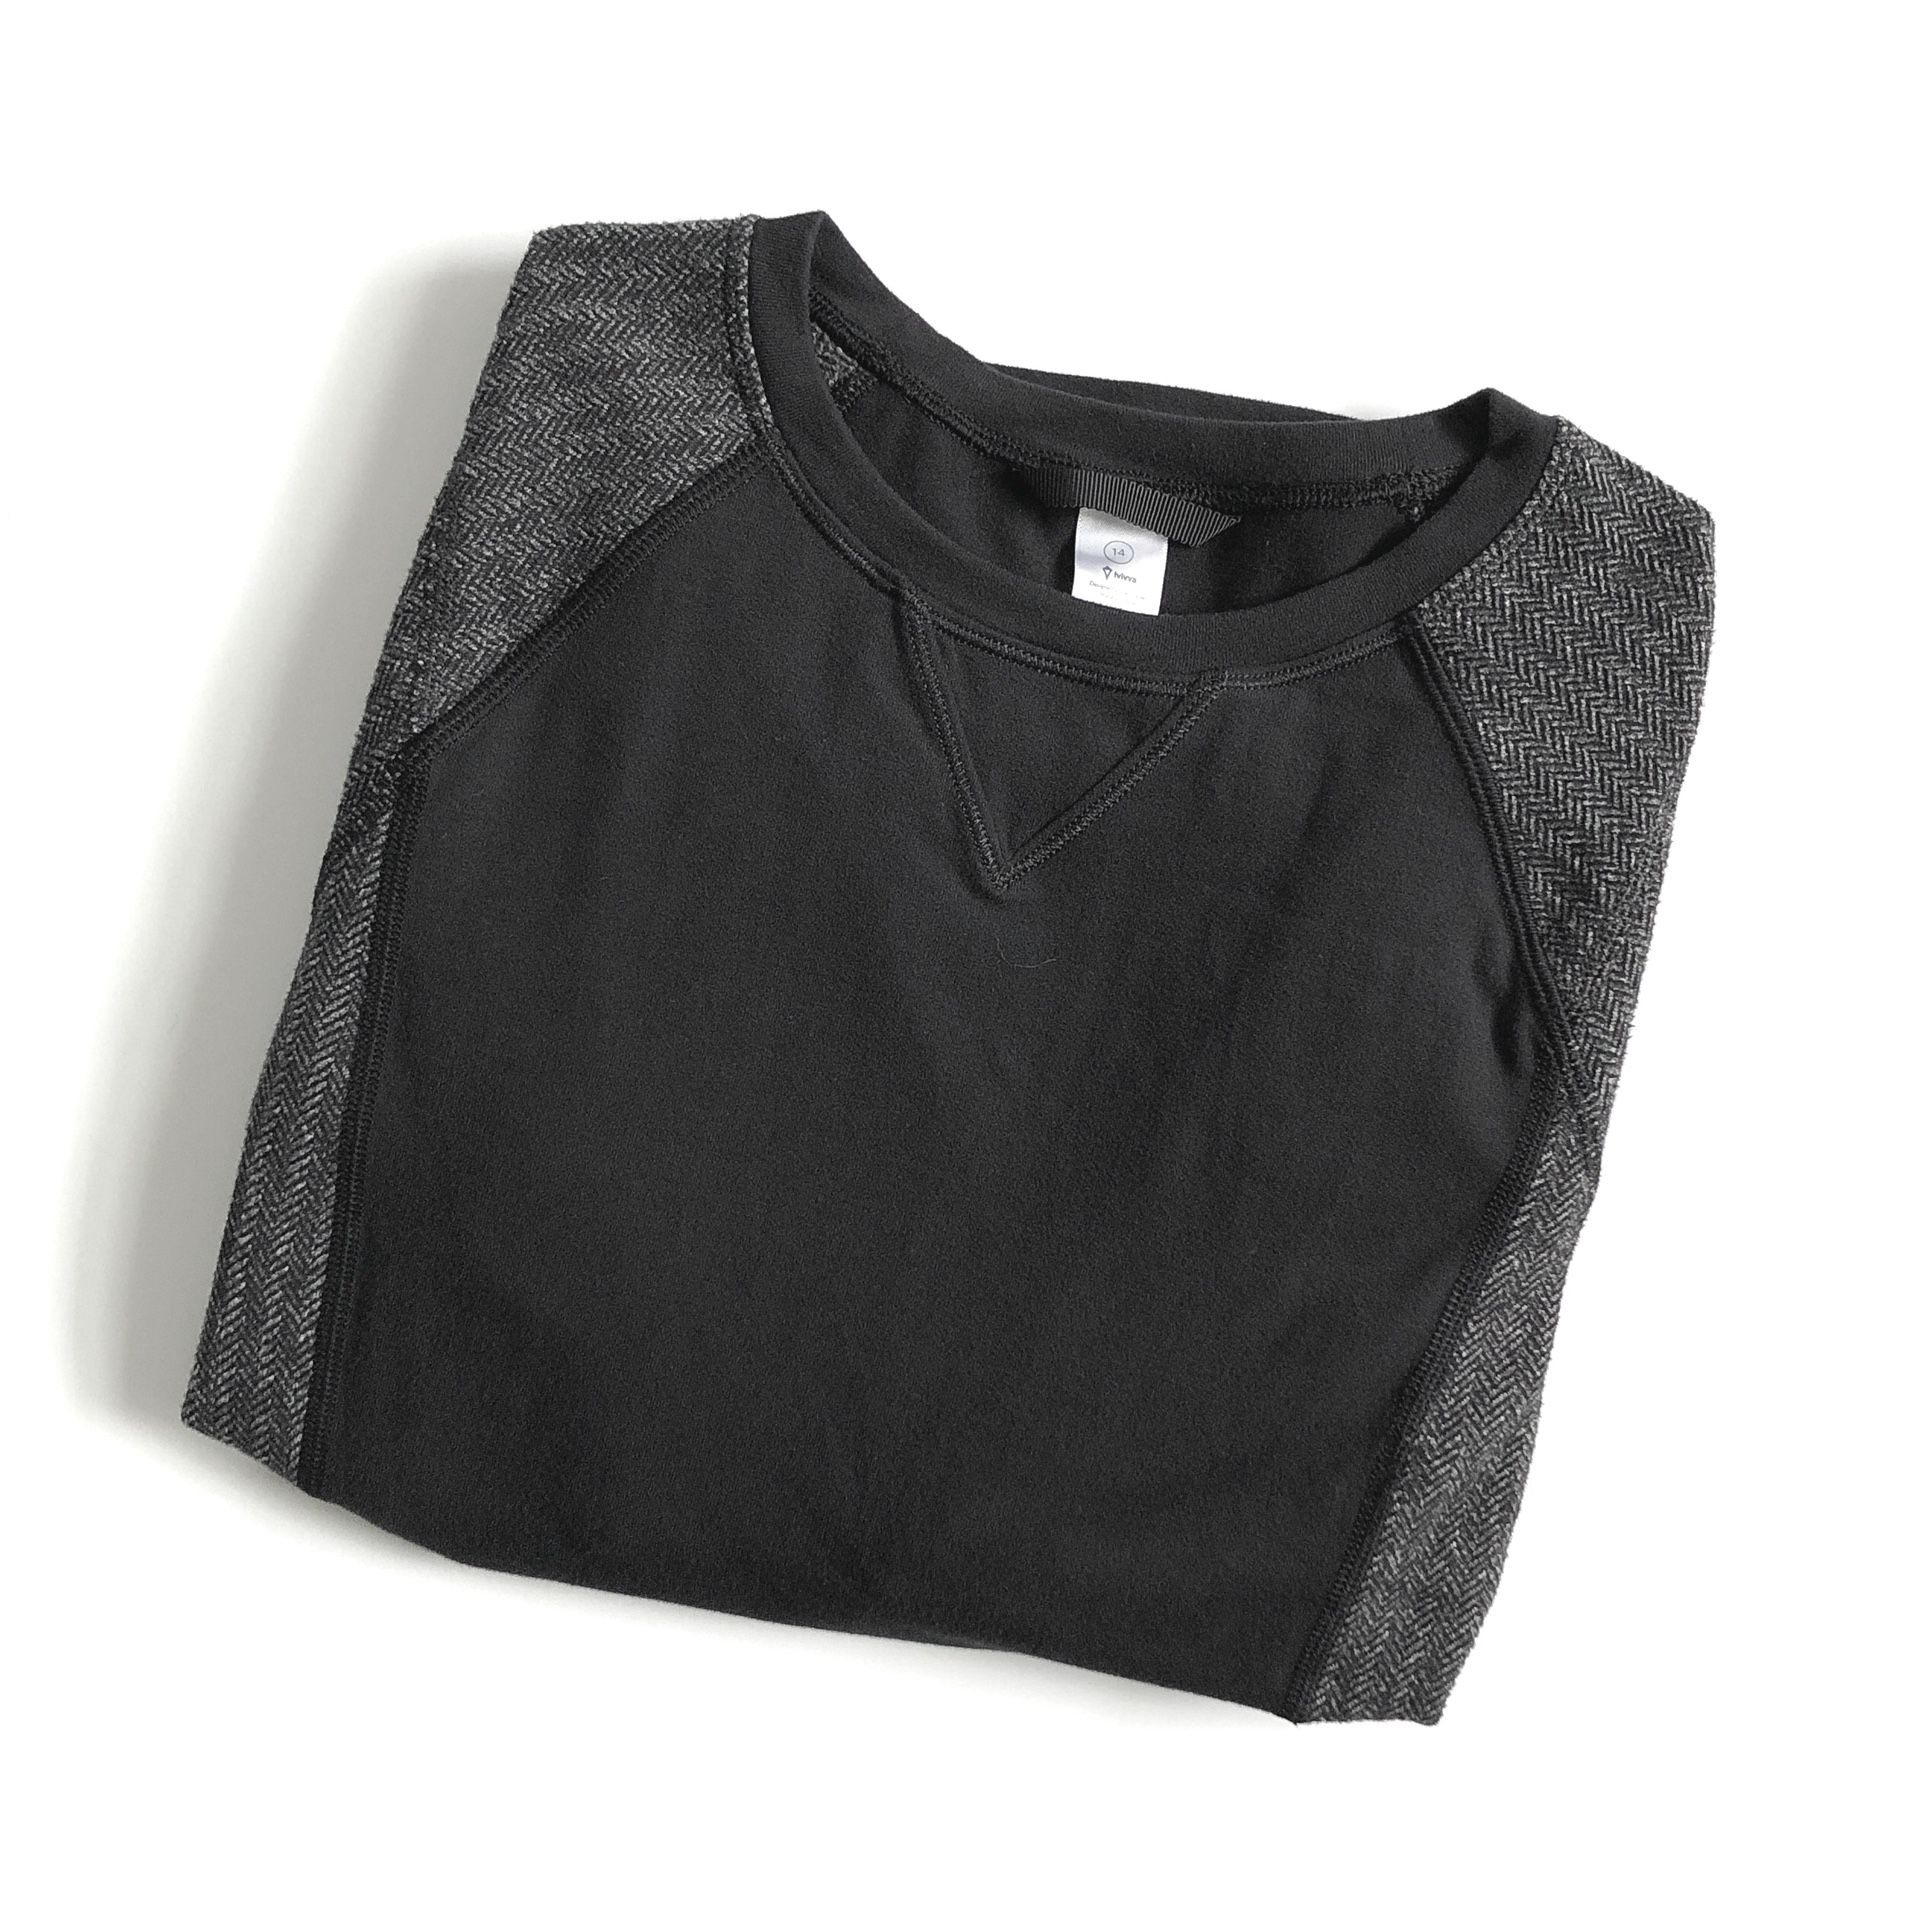 Ivivva Girl’s Long Sleeve Shirt in Heathered Black Herringbone (Girl’s 14)